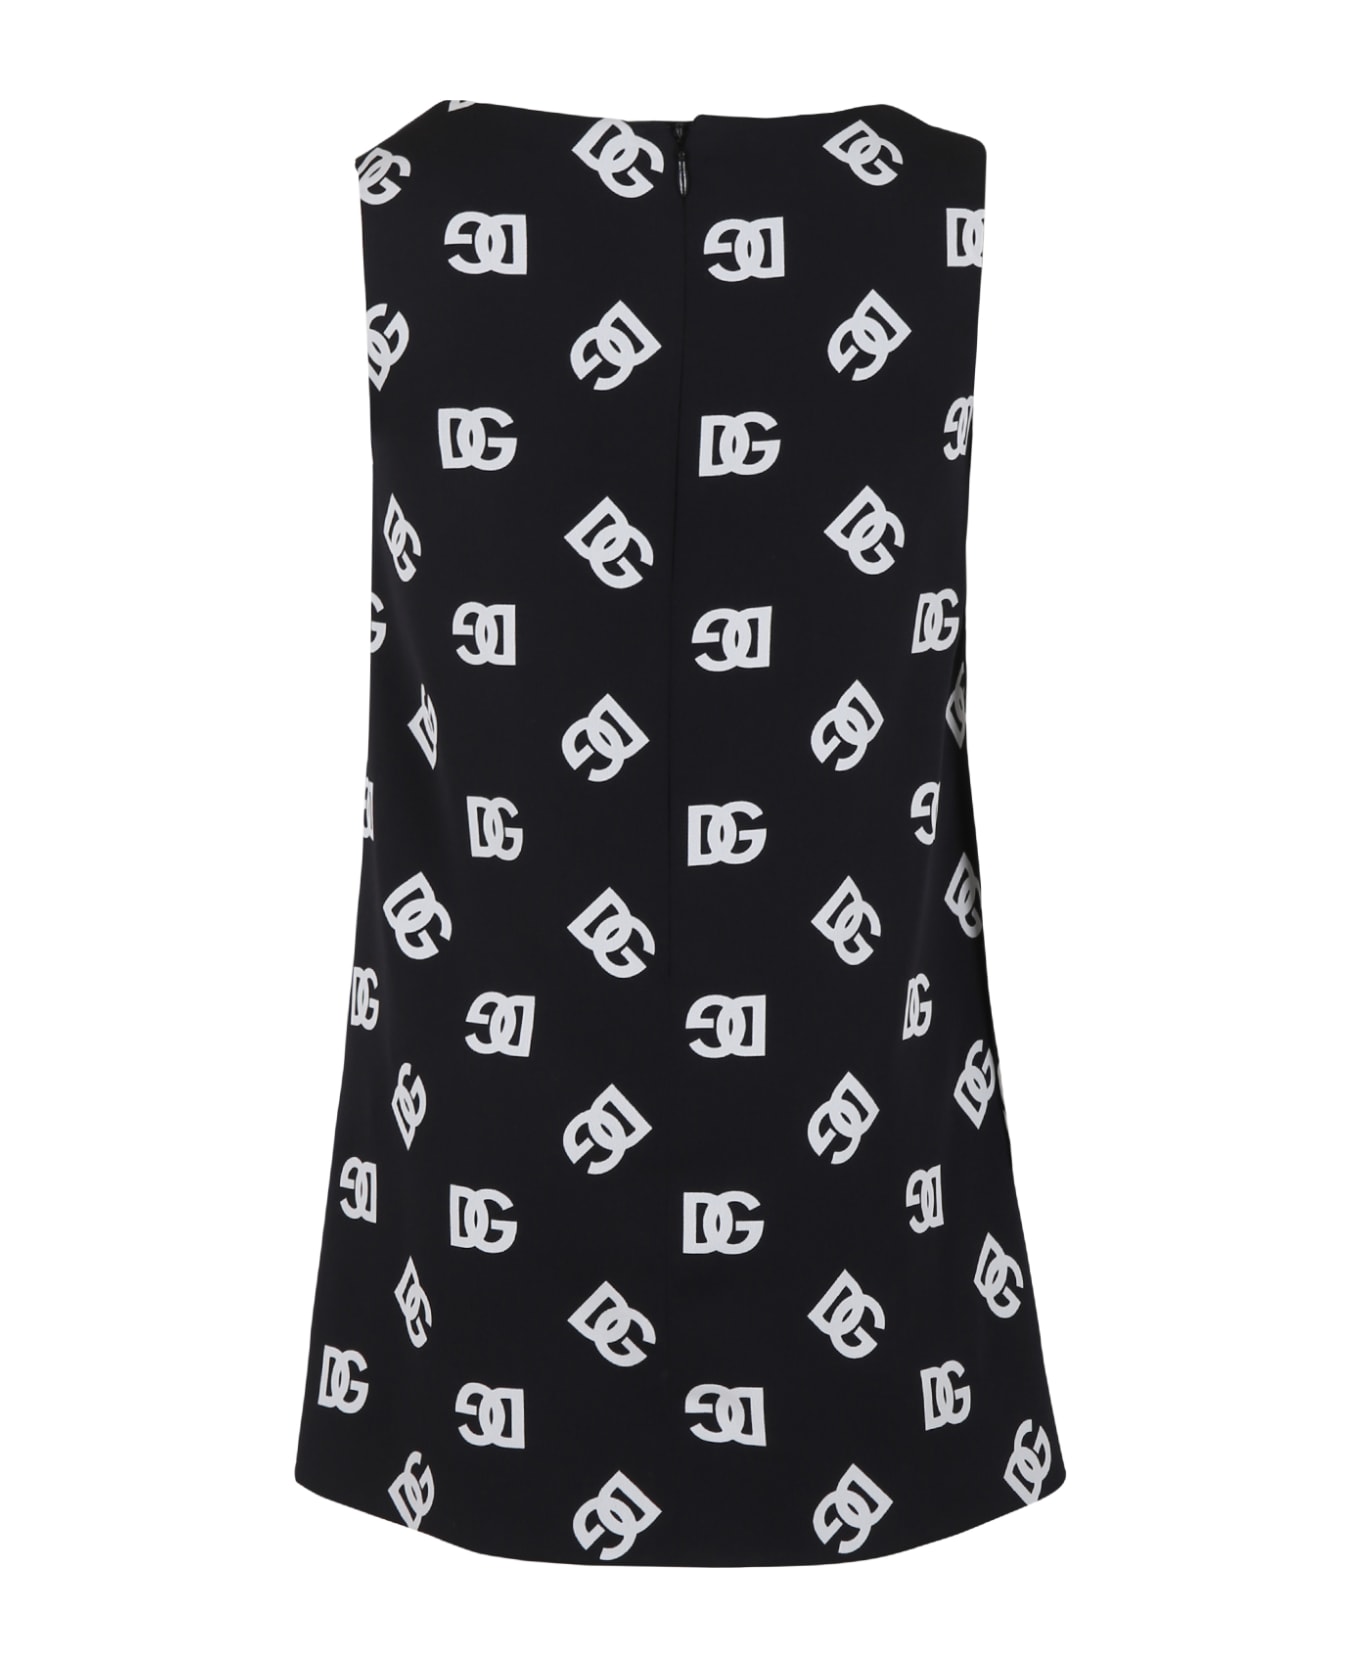 Dolce & Gabbana Black Dresss For Girl With Iconic Monogram - Black